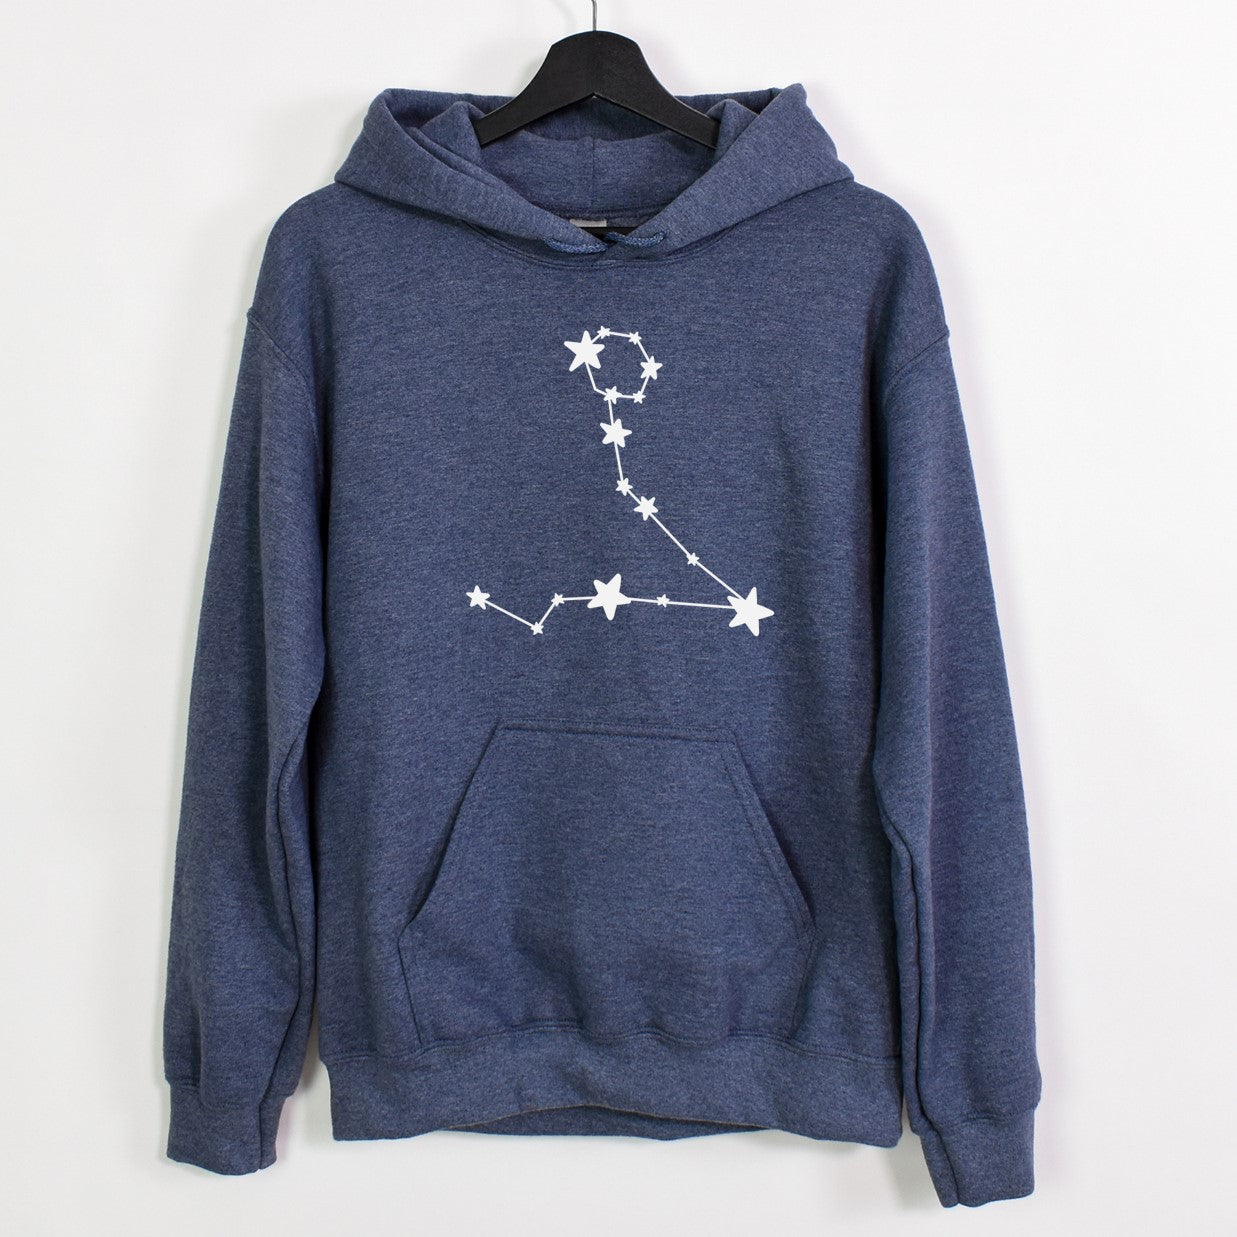 Zodiac Constellation T-shirt, Crewneck Sweatshirt or Hoodie - PISCES